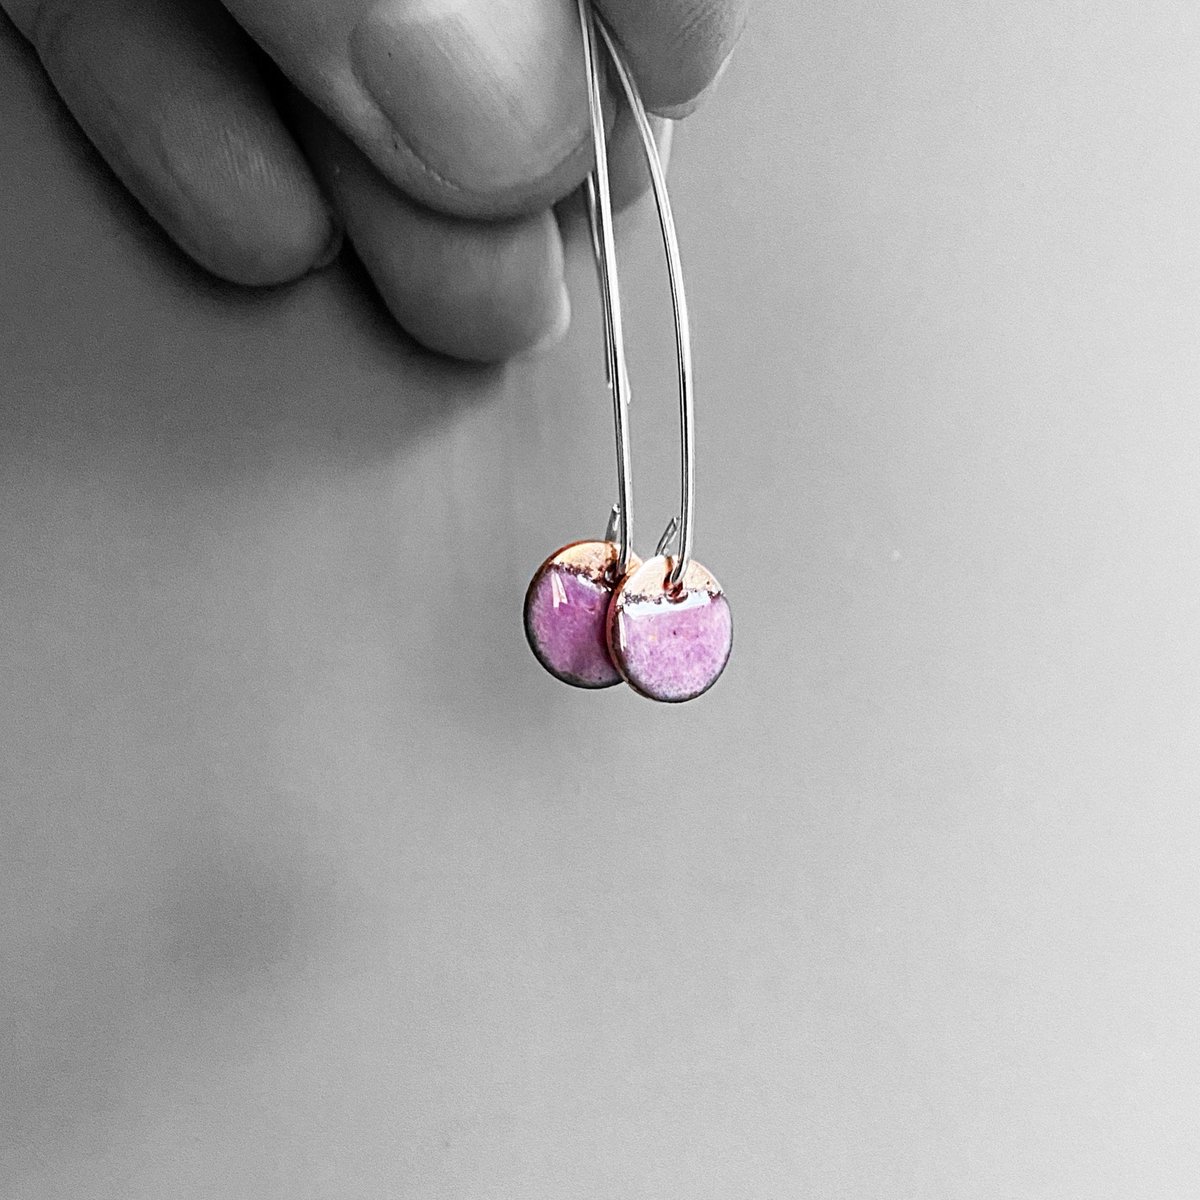 Raspberry Pink Enamel Disc Earrings , Cute Geometric Drop Earrings tuppu.net/5fd54cb3 #UKHashtags #shopsmall #bizbubble #HandmadeHour #inbizhour ##UKGiftHour #MHHSBD #giftideas #SmallDiscEarrings